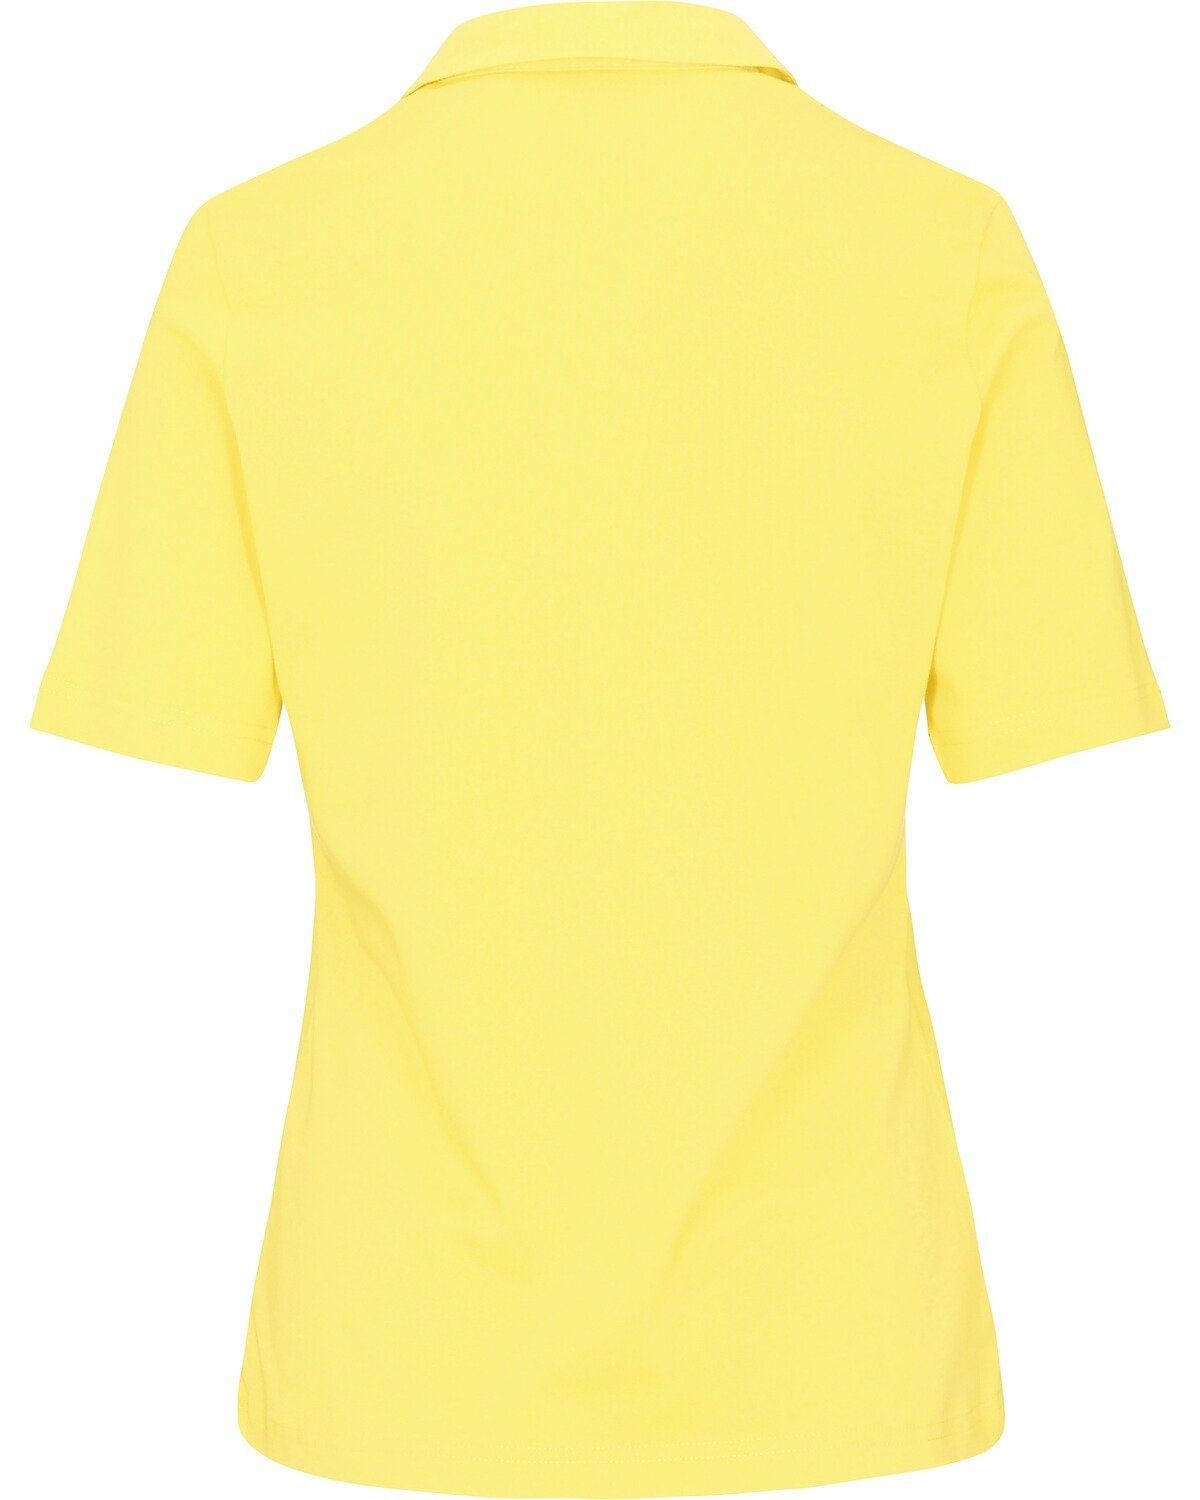 Clarina Poloshirt Poloshirt Gelb